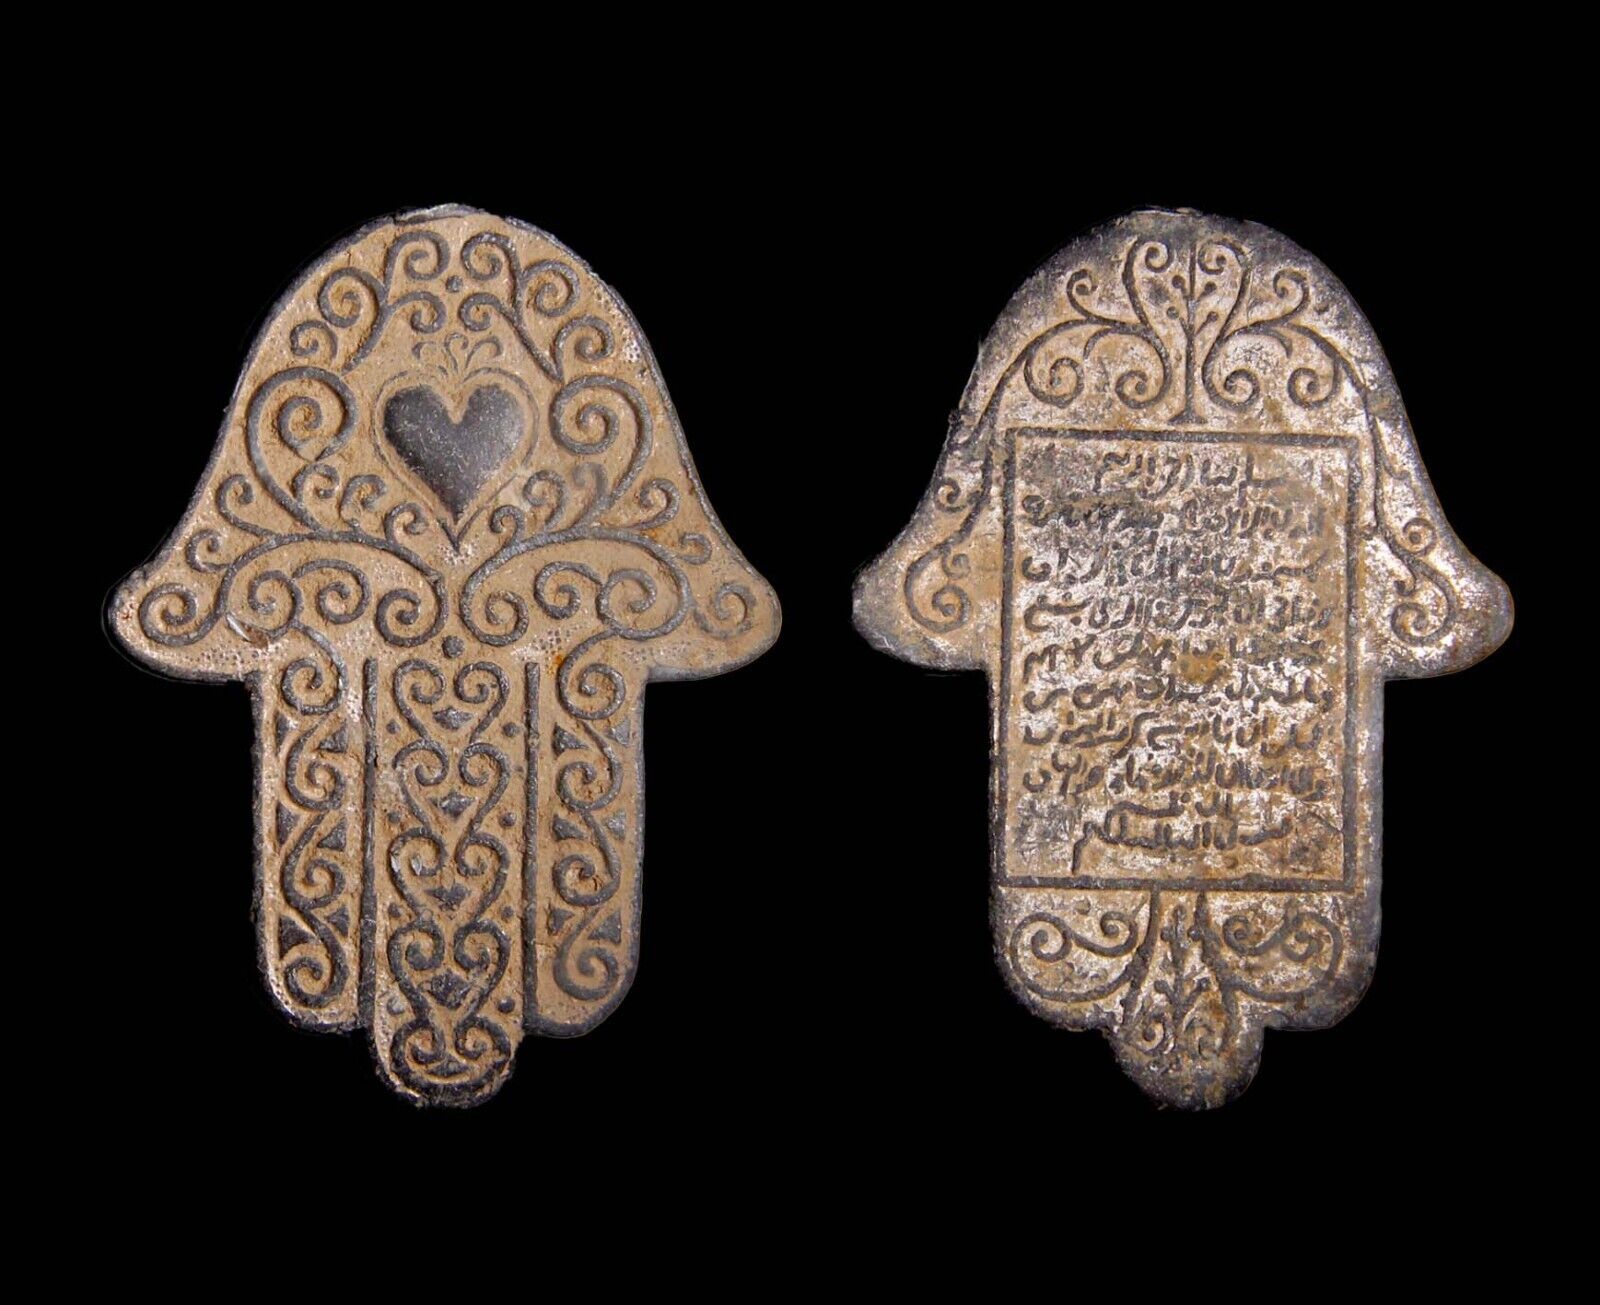 RARE Islamic Antiquity Ancient Artifact 14-16th Century SILVER Talisman Quran